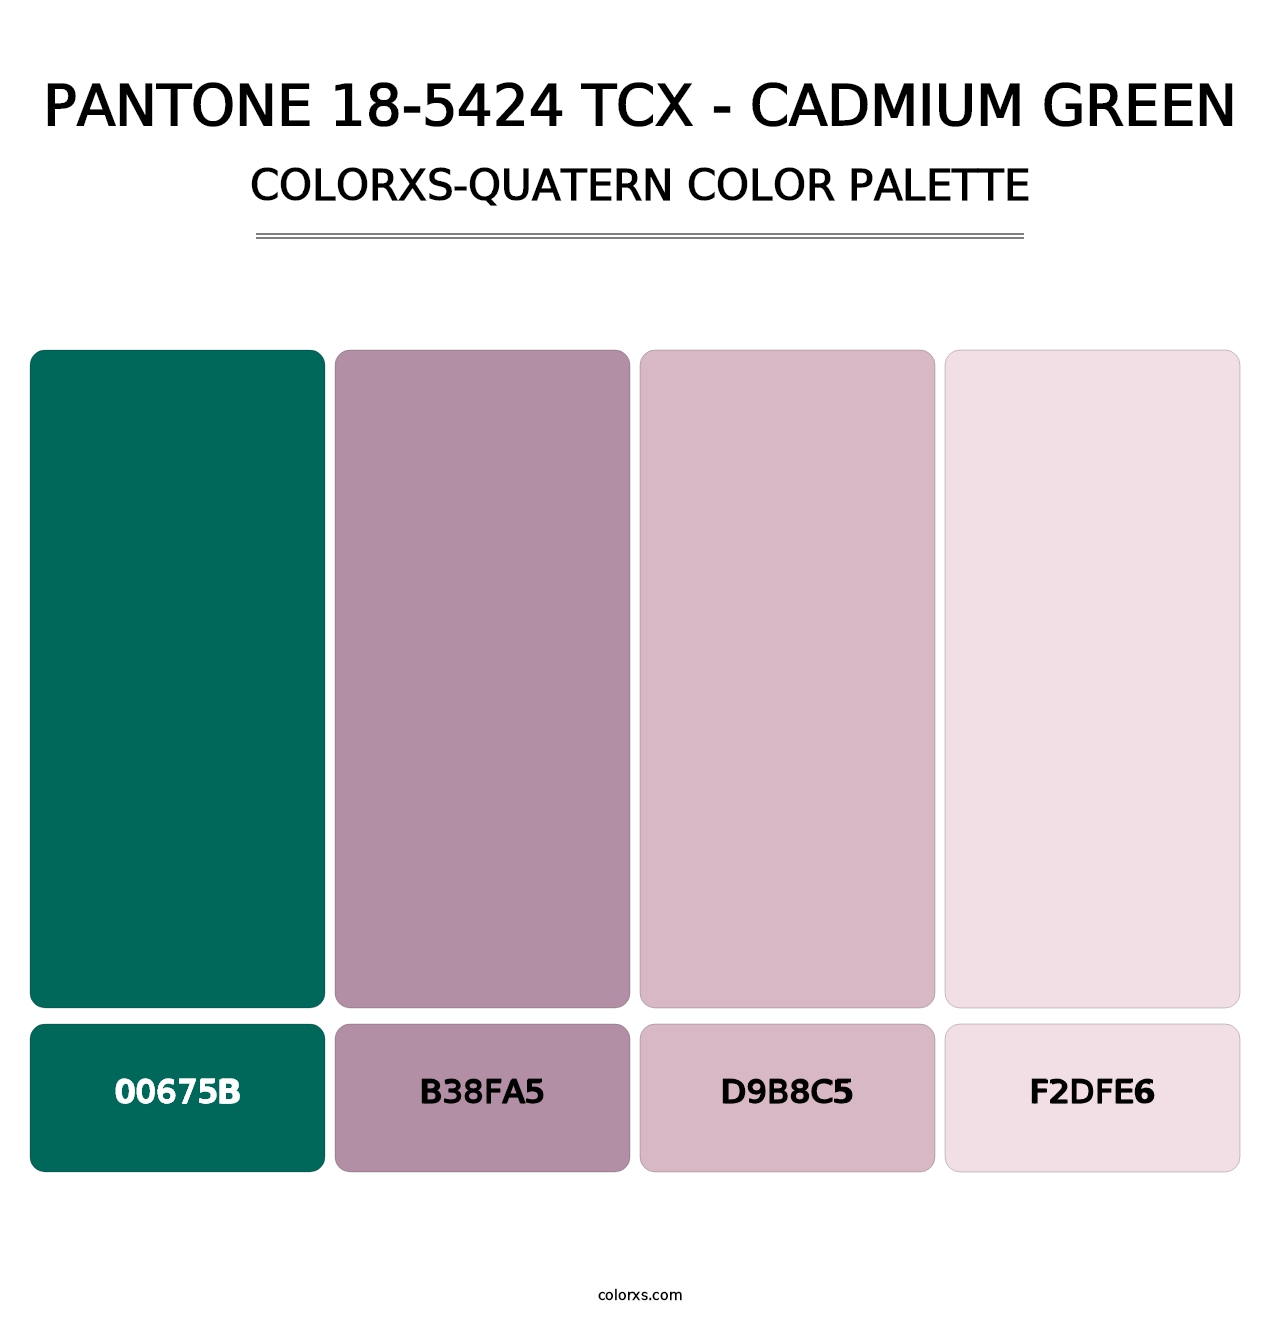 PANTONE 18-5424 TCX - Cadmium Green - Colorxs Quatern Palette